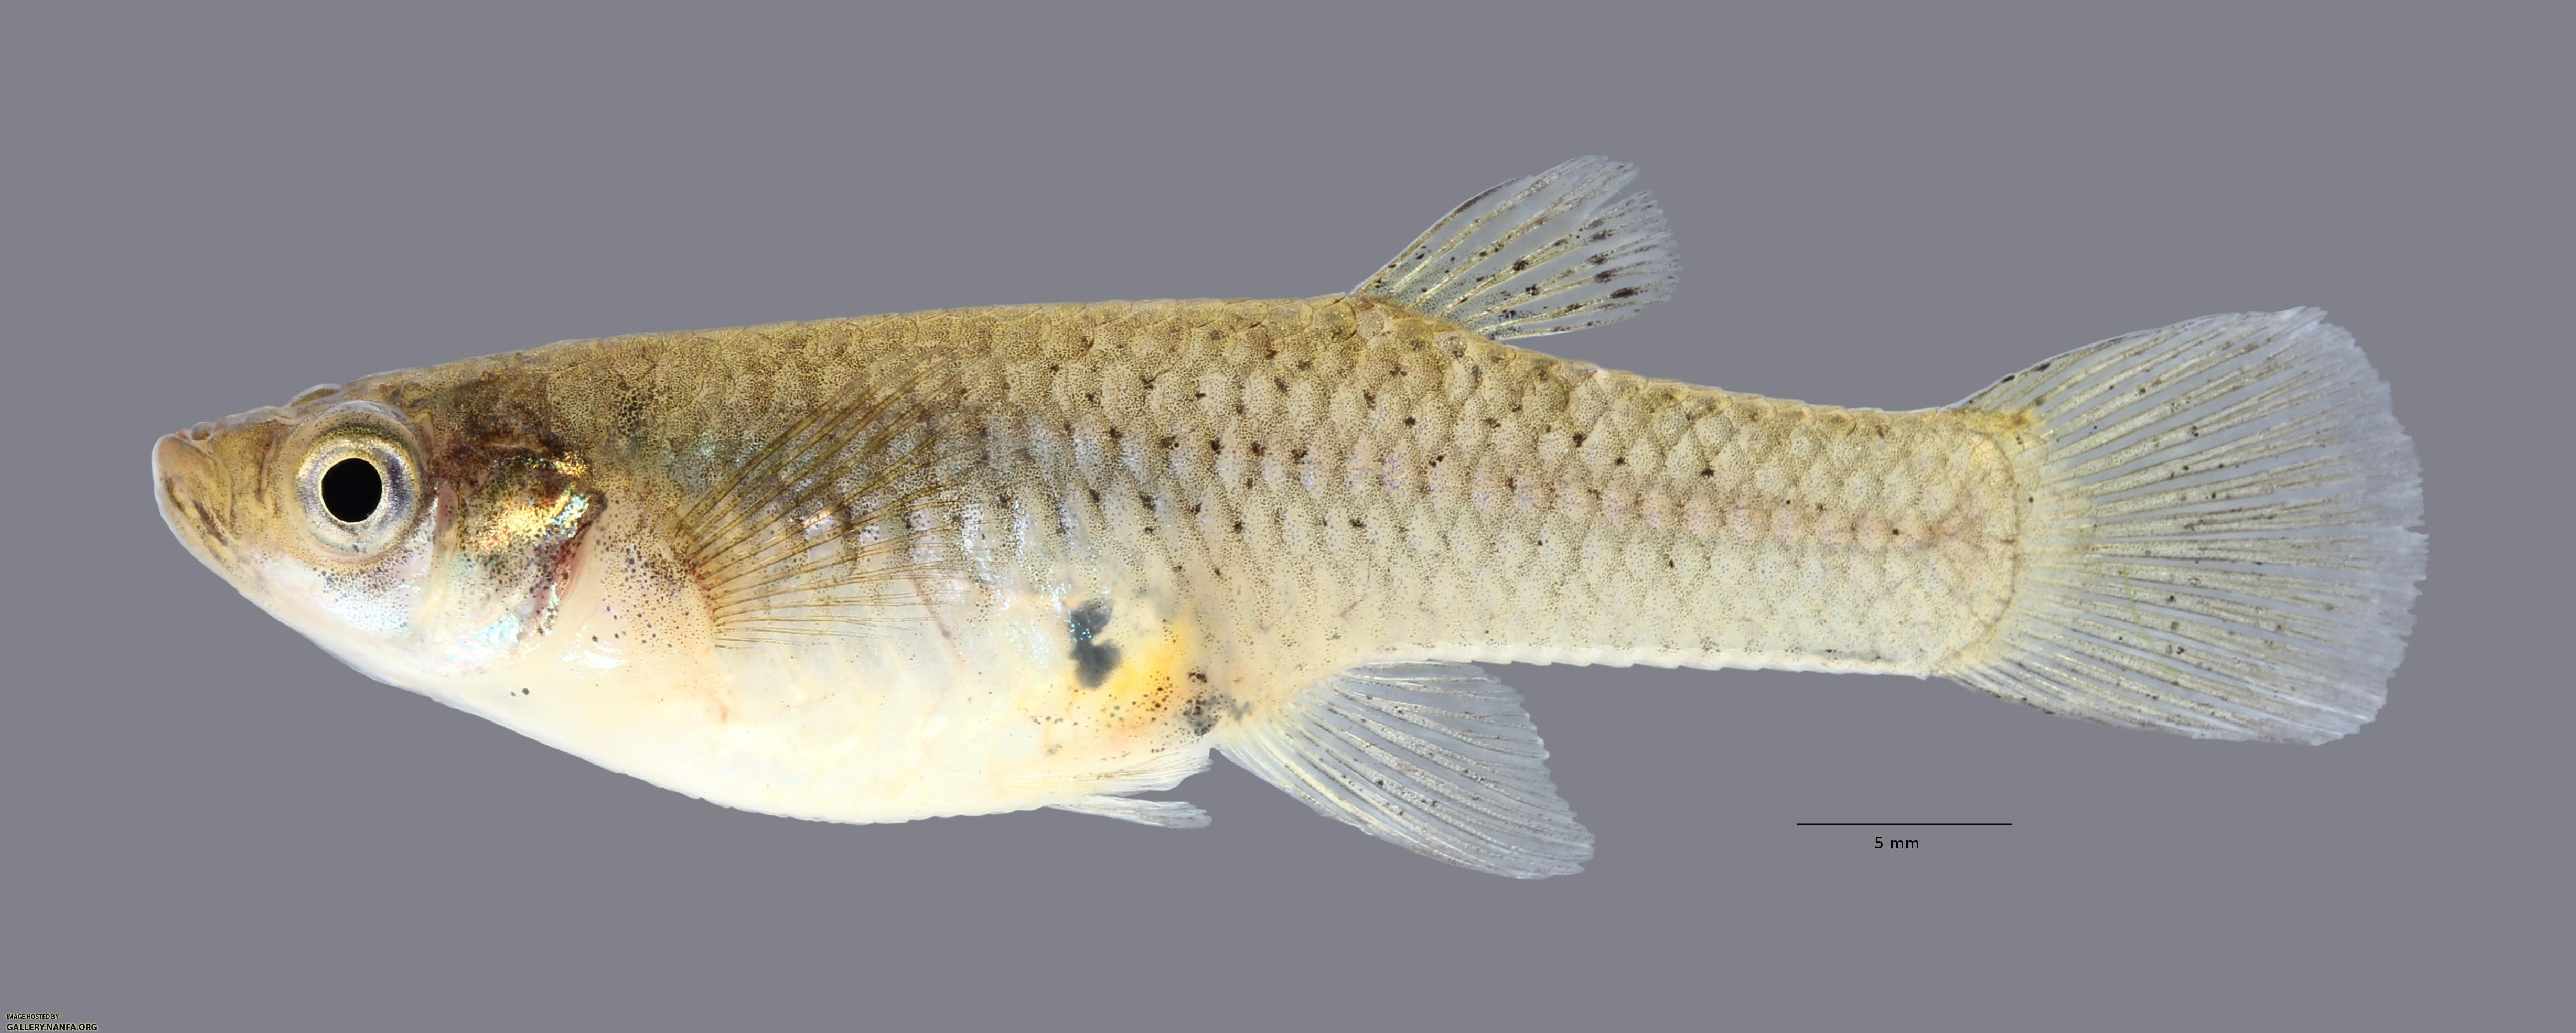 Gambusia affinis Western Mosquitofish 2485ws